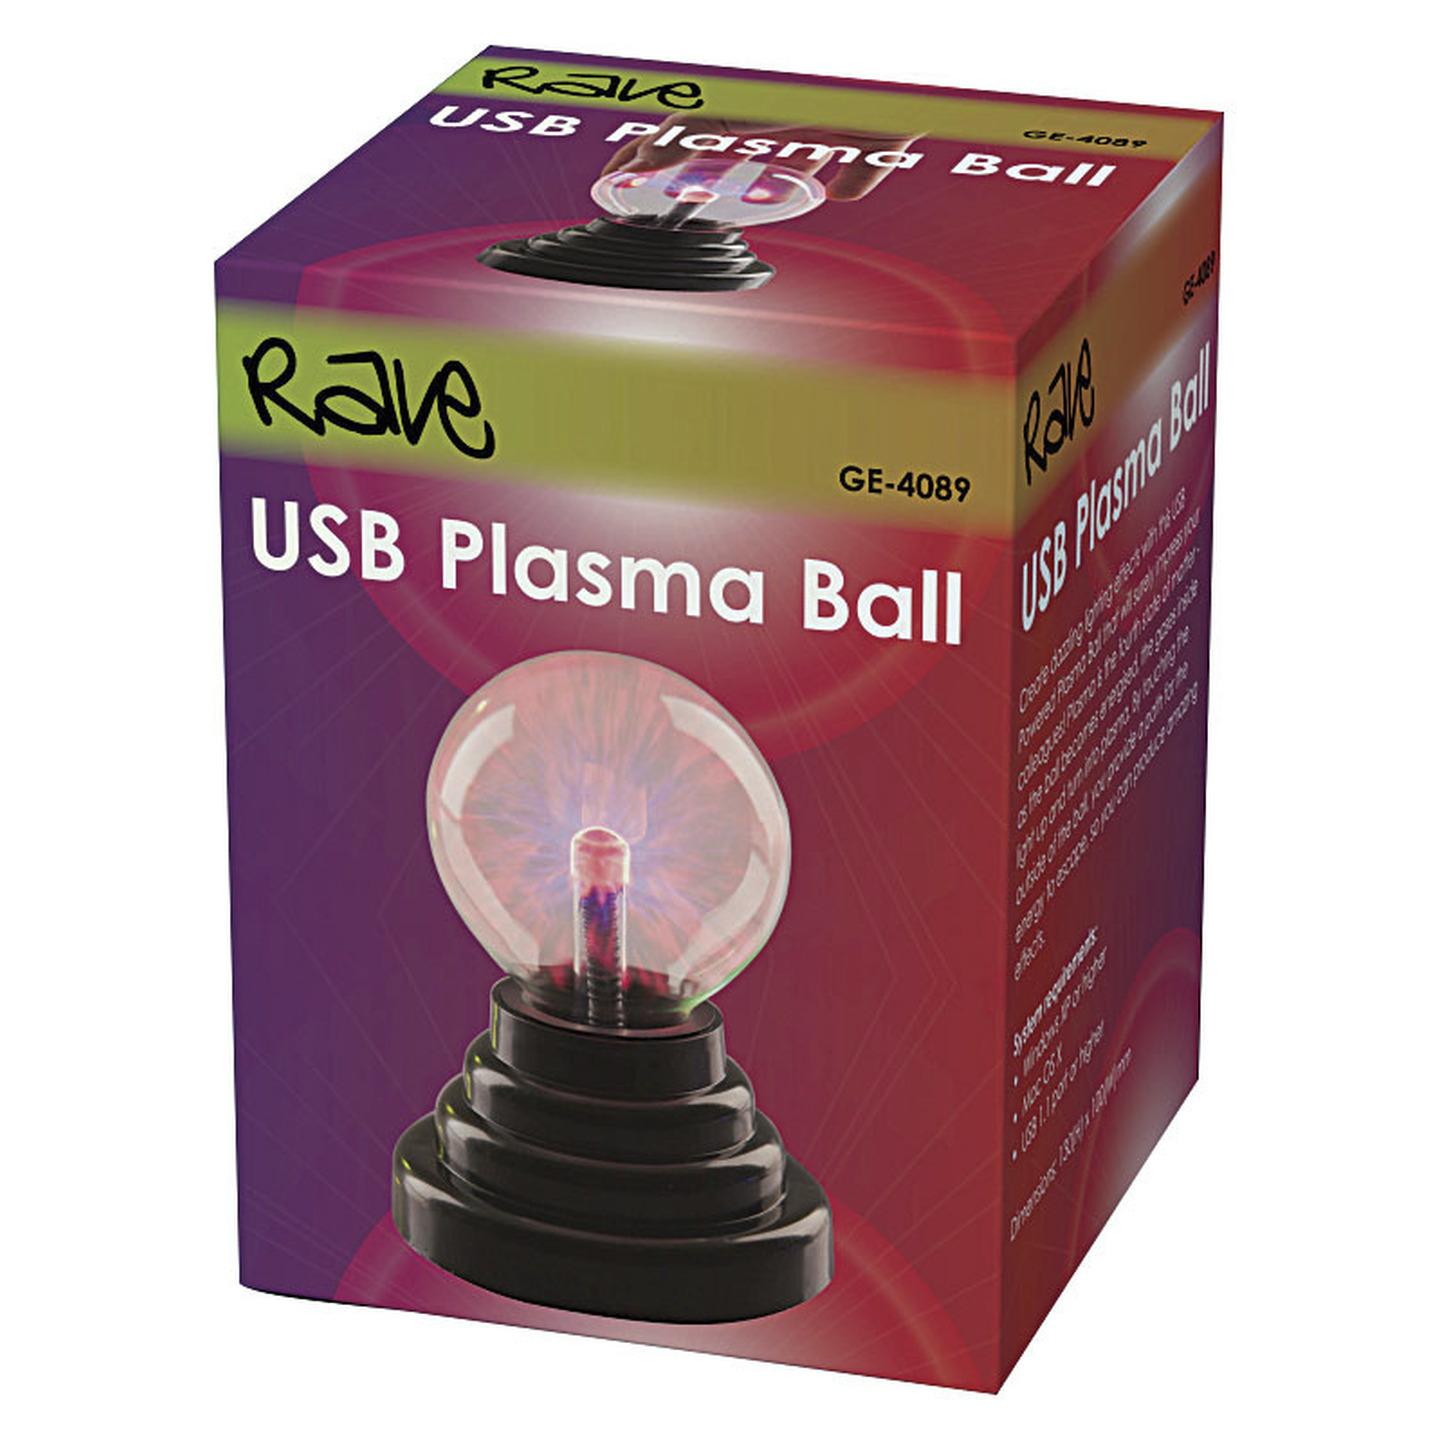 USB Powered Plasma Ball